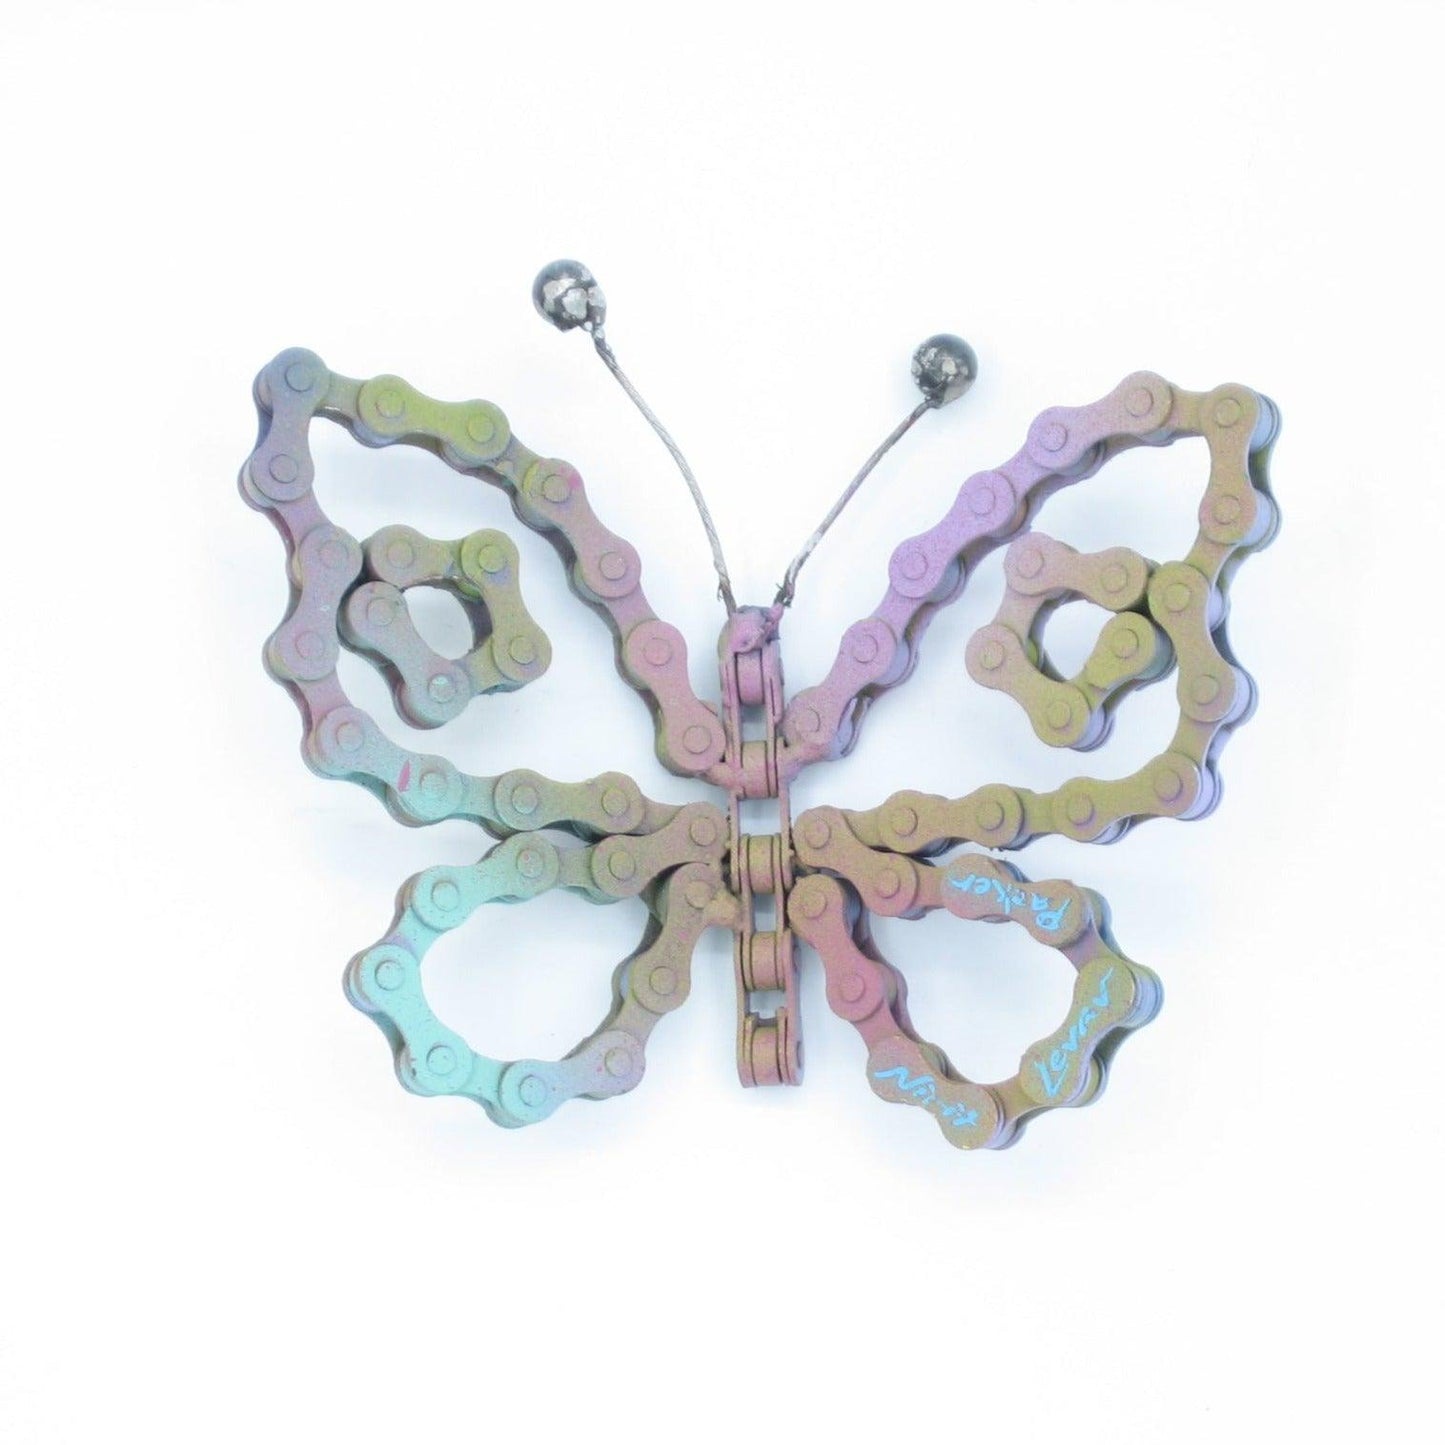 Butterfly Sculpture | UNCHAINED by NIRIT LEVAV PACKER